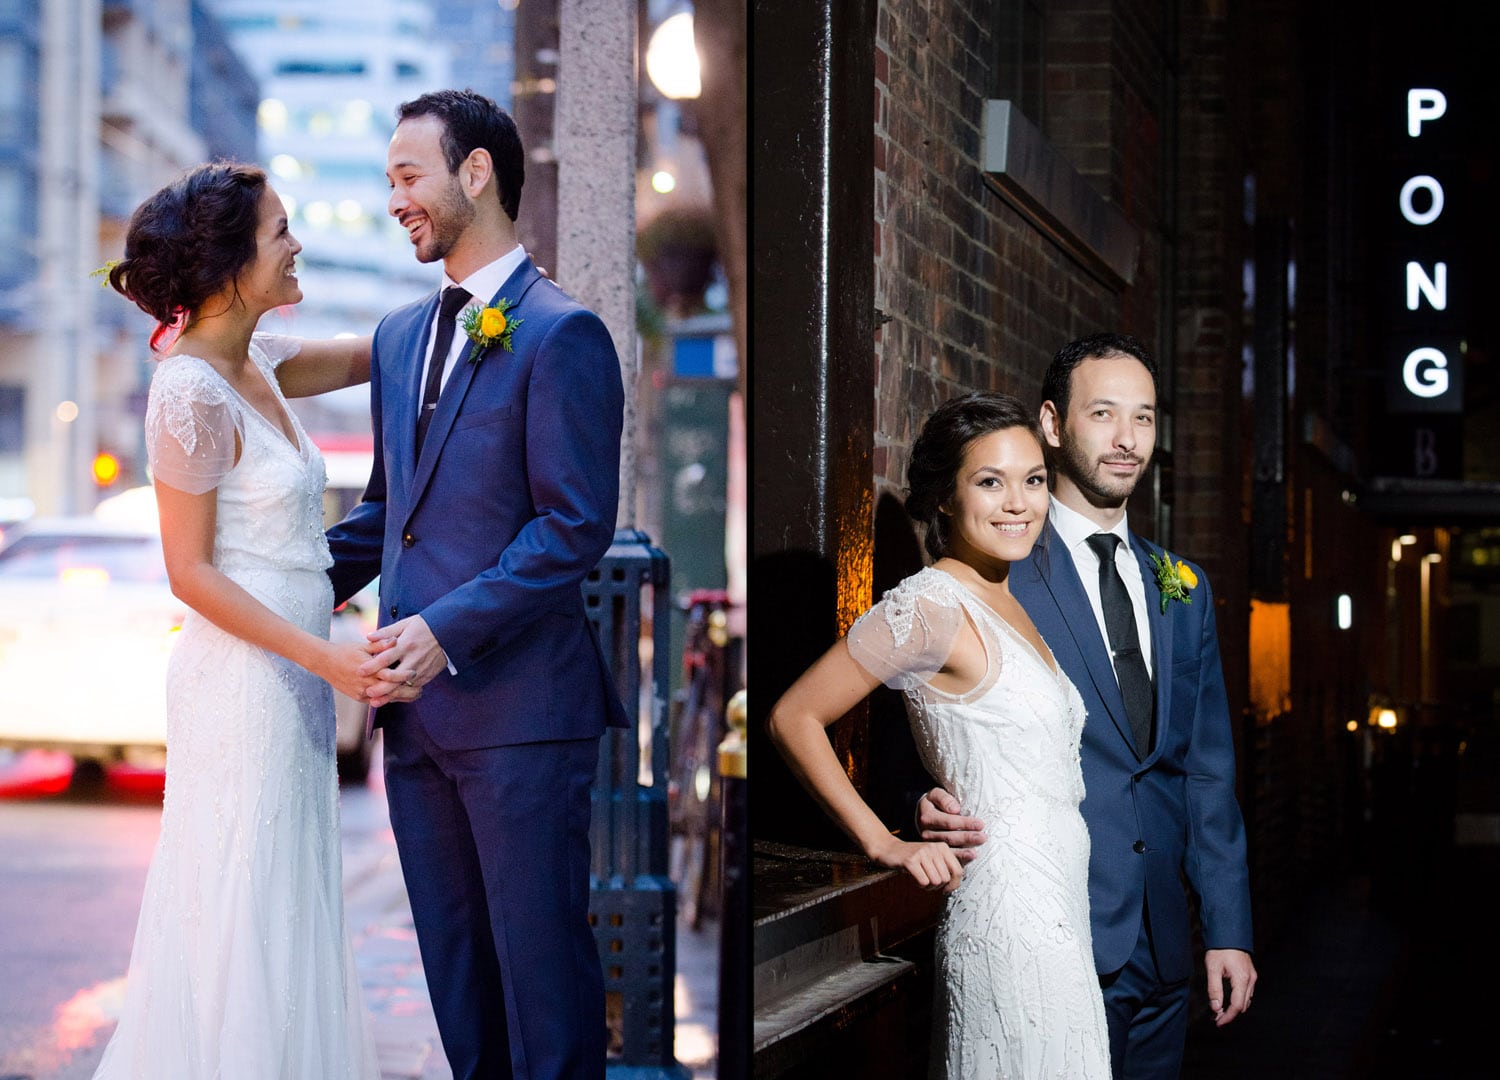 2nd Floor Events, 461 King Street West, Toronto Wedding Photography